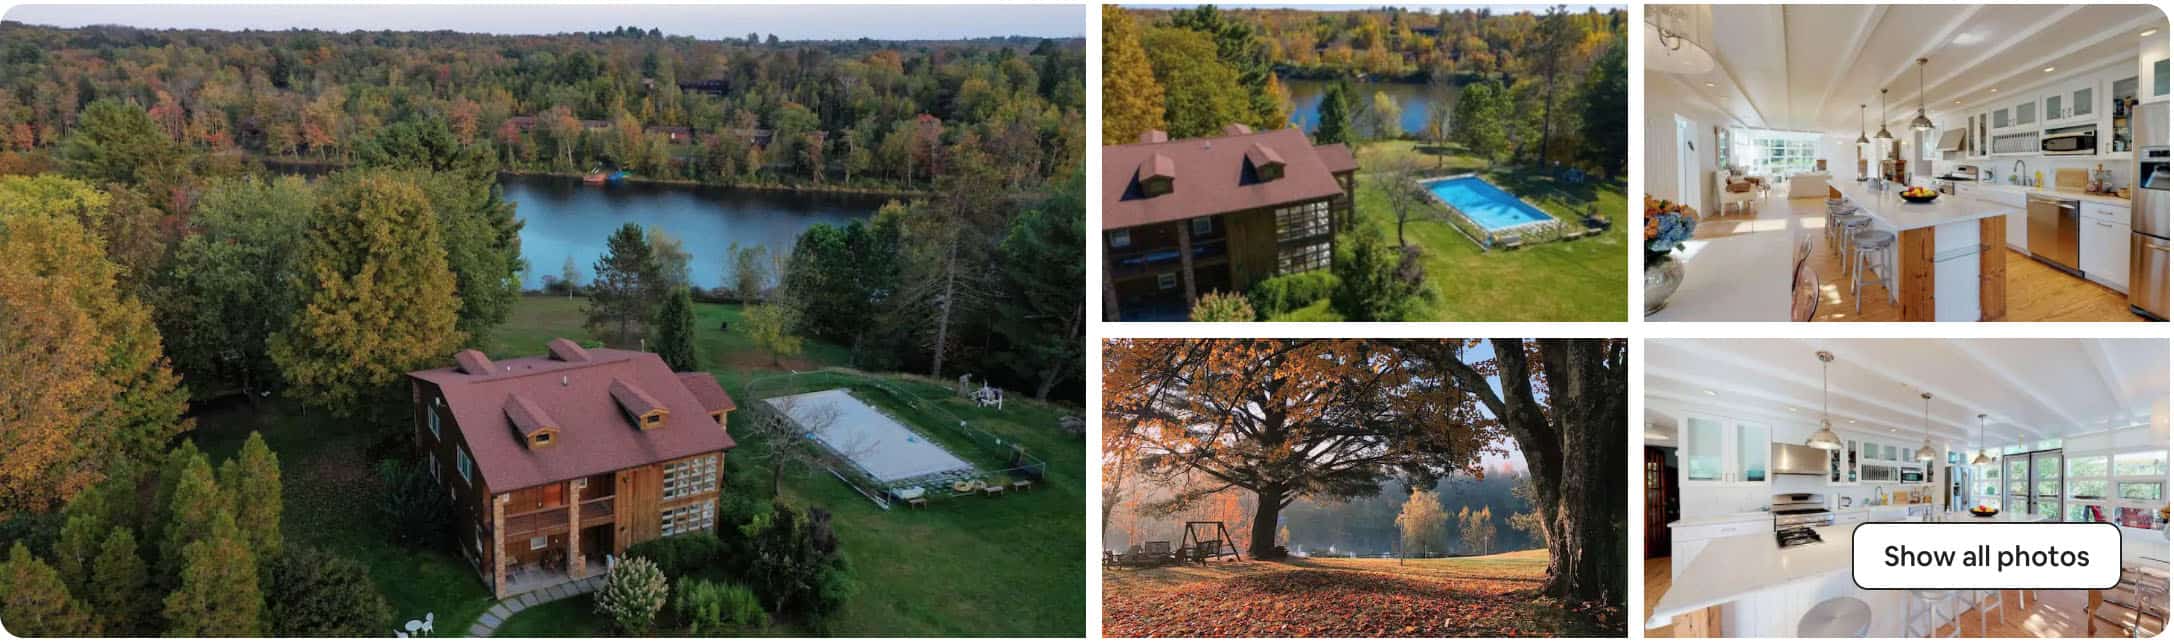 Catskills Airbnb on Swan Lake